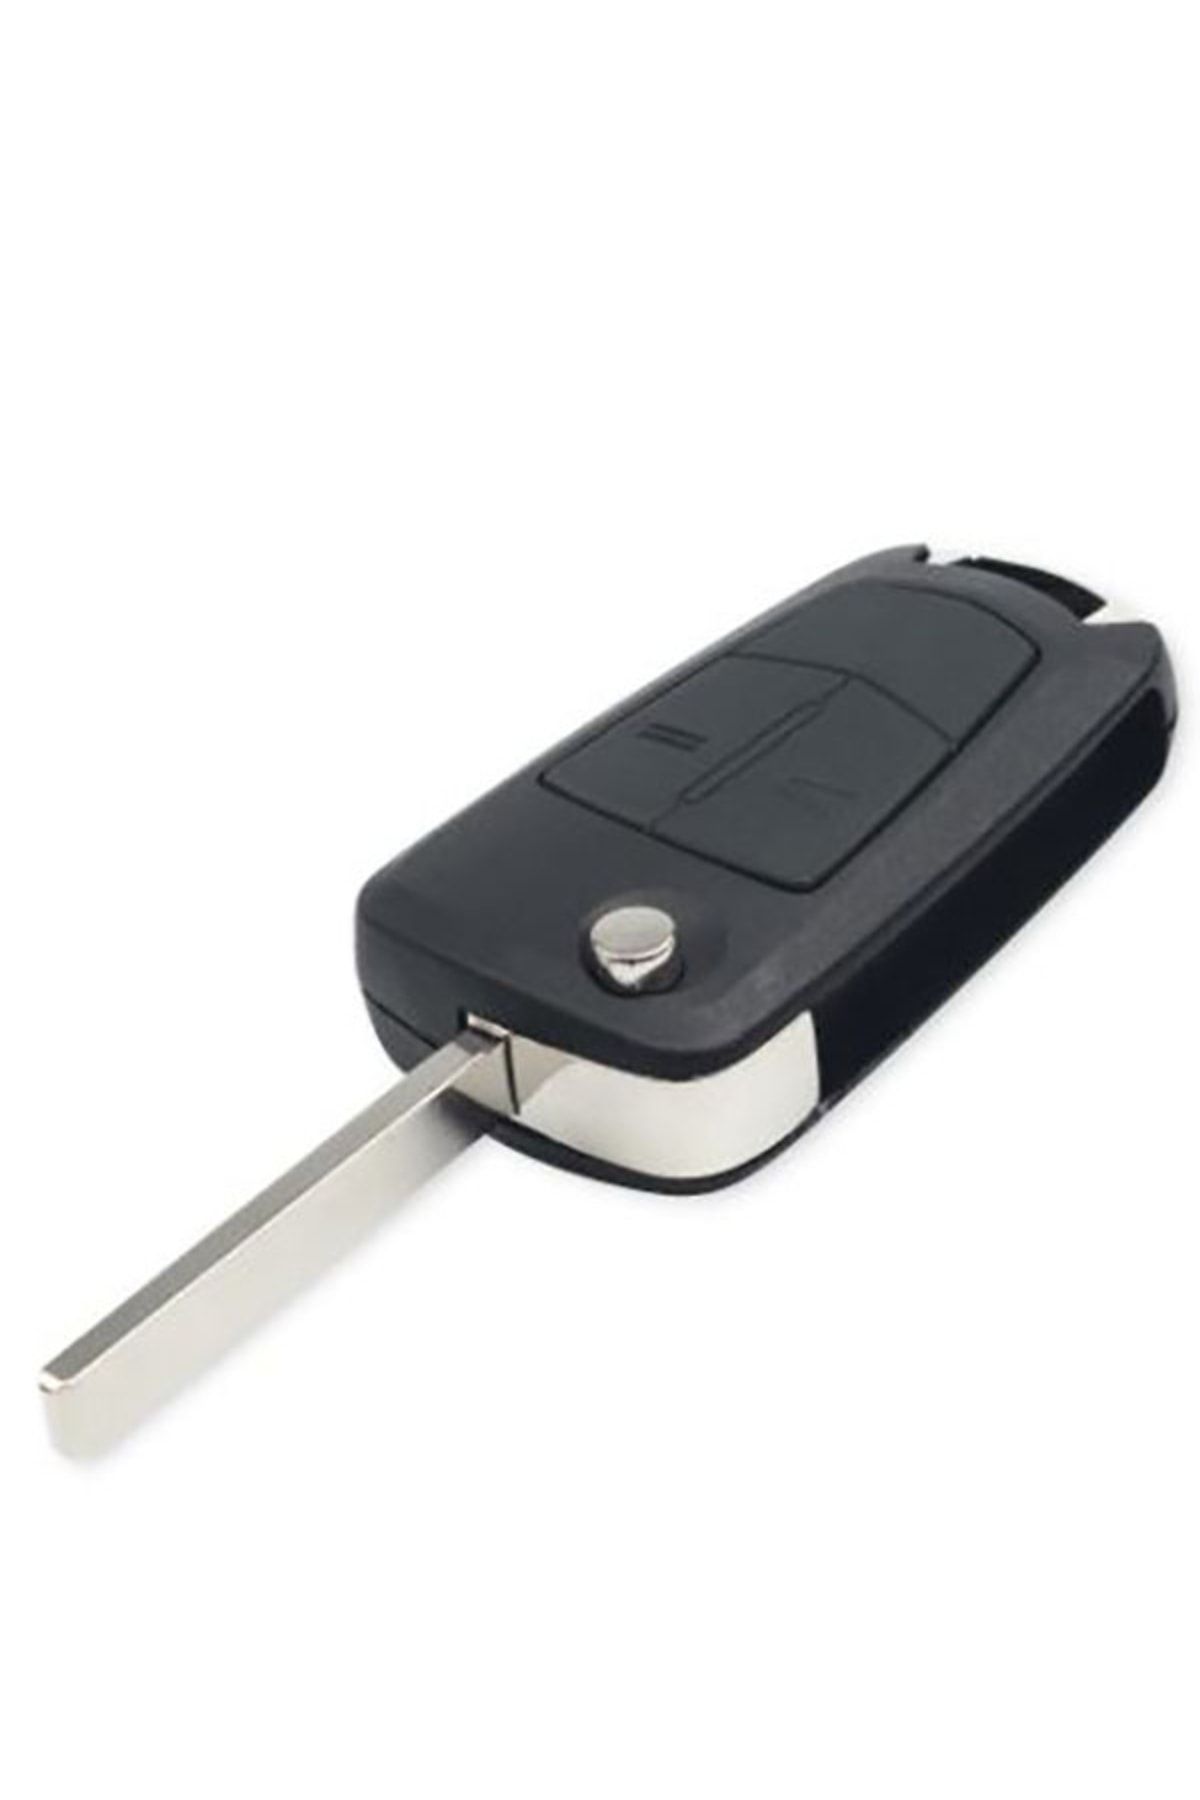 babikamium Opel Astra H Corsa D 2 Buton Sustalı Boş Kap Kumanda Kabı Oto Araba Anahtar Kabı